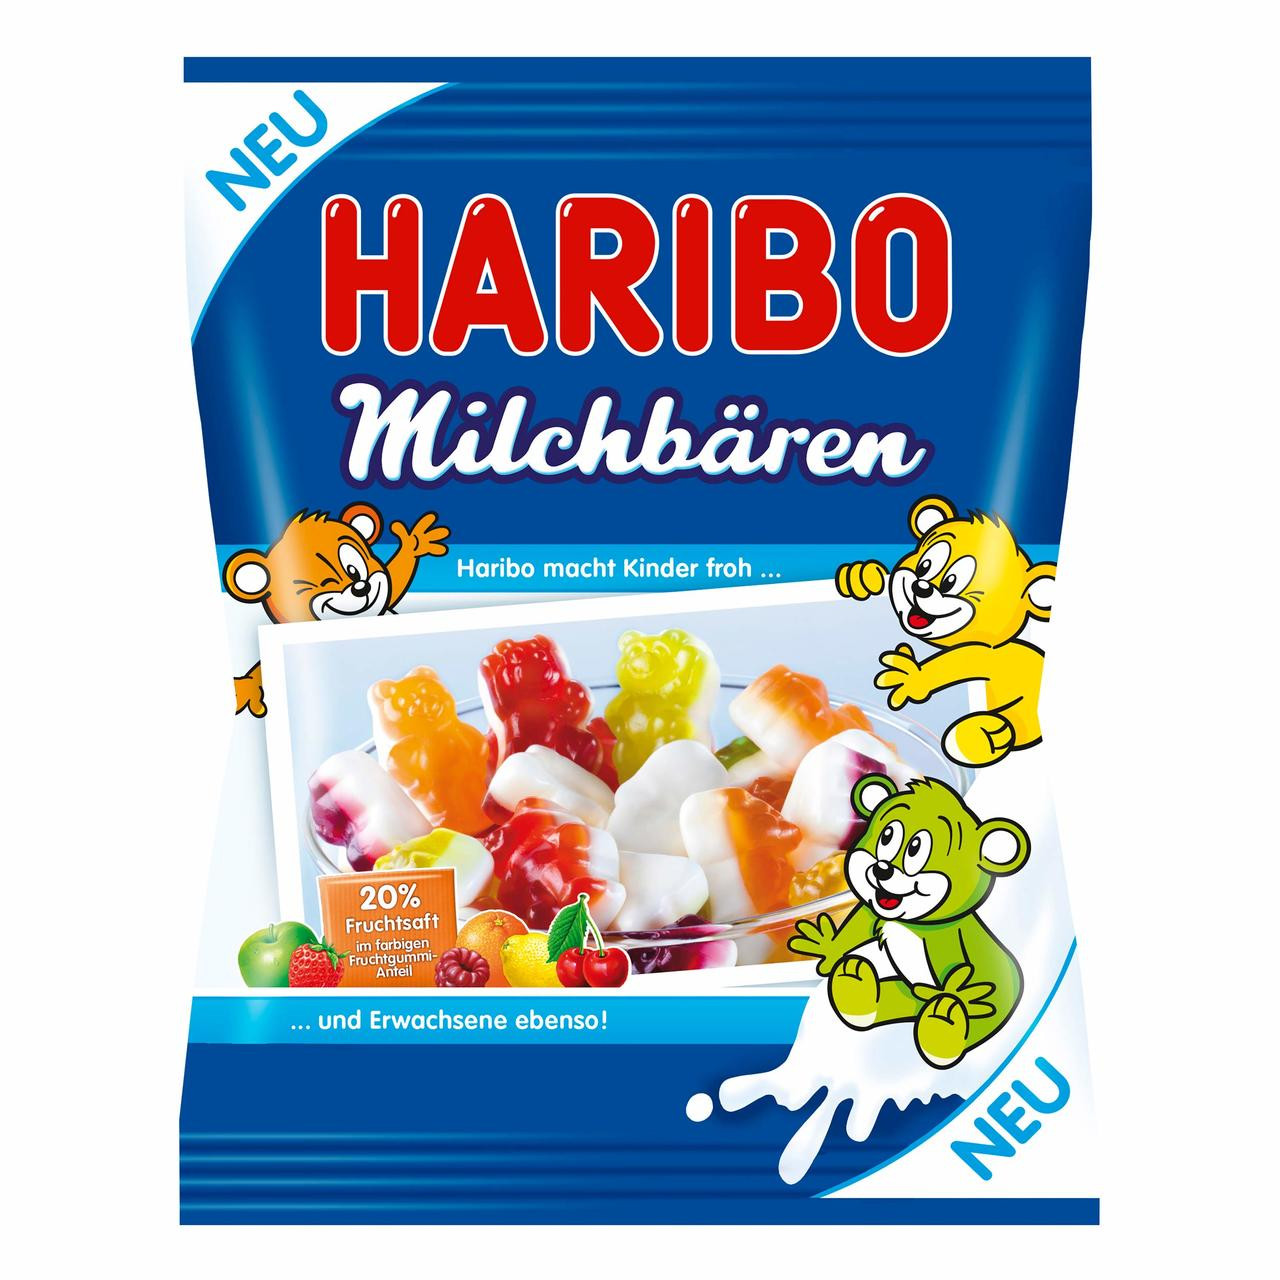 Haribo (Germany) Milchbaeren (Milkbears) 28/5.64 oz #19504